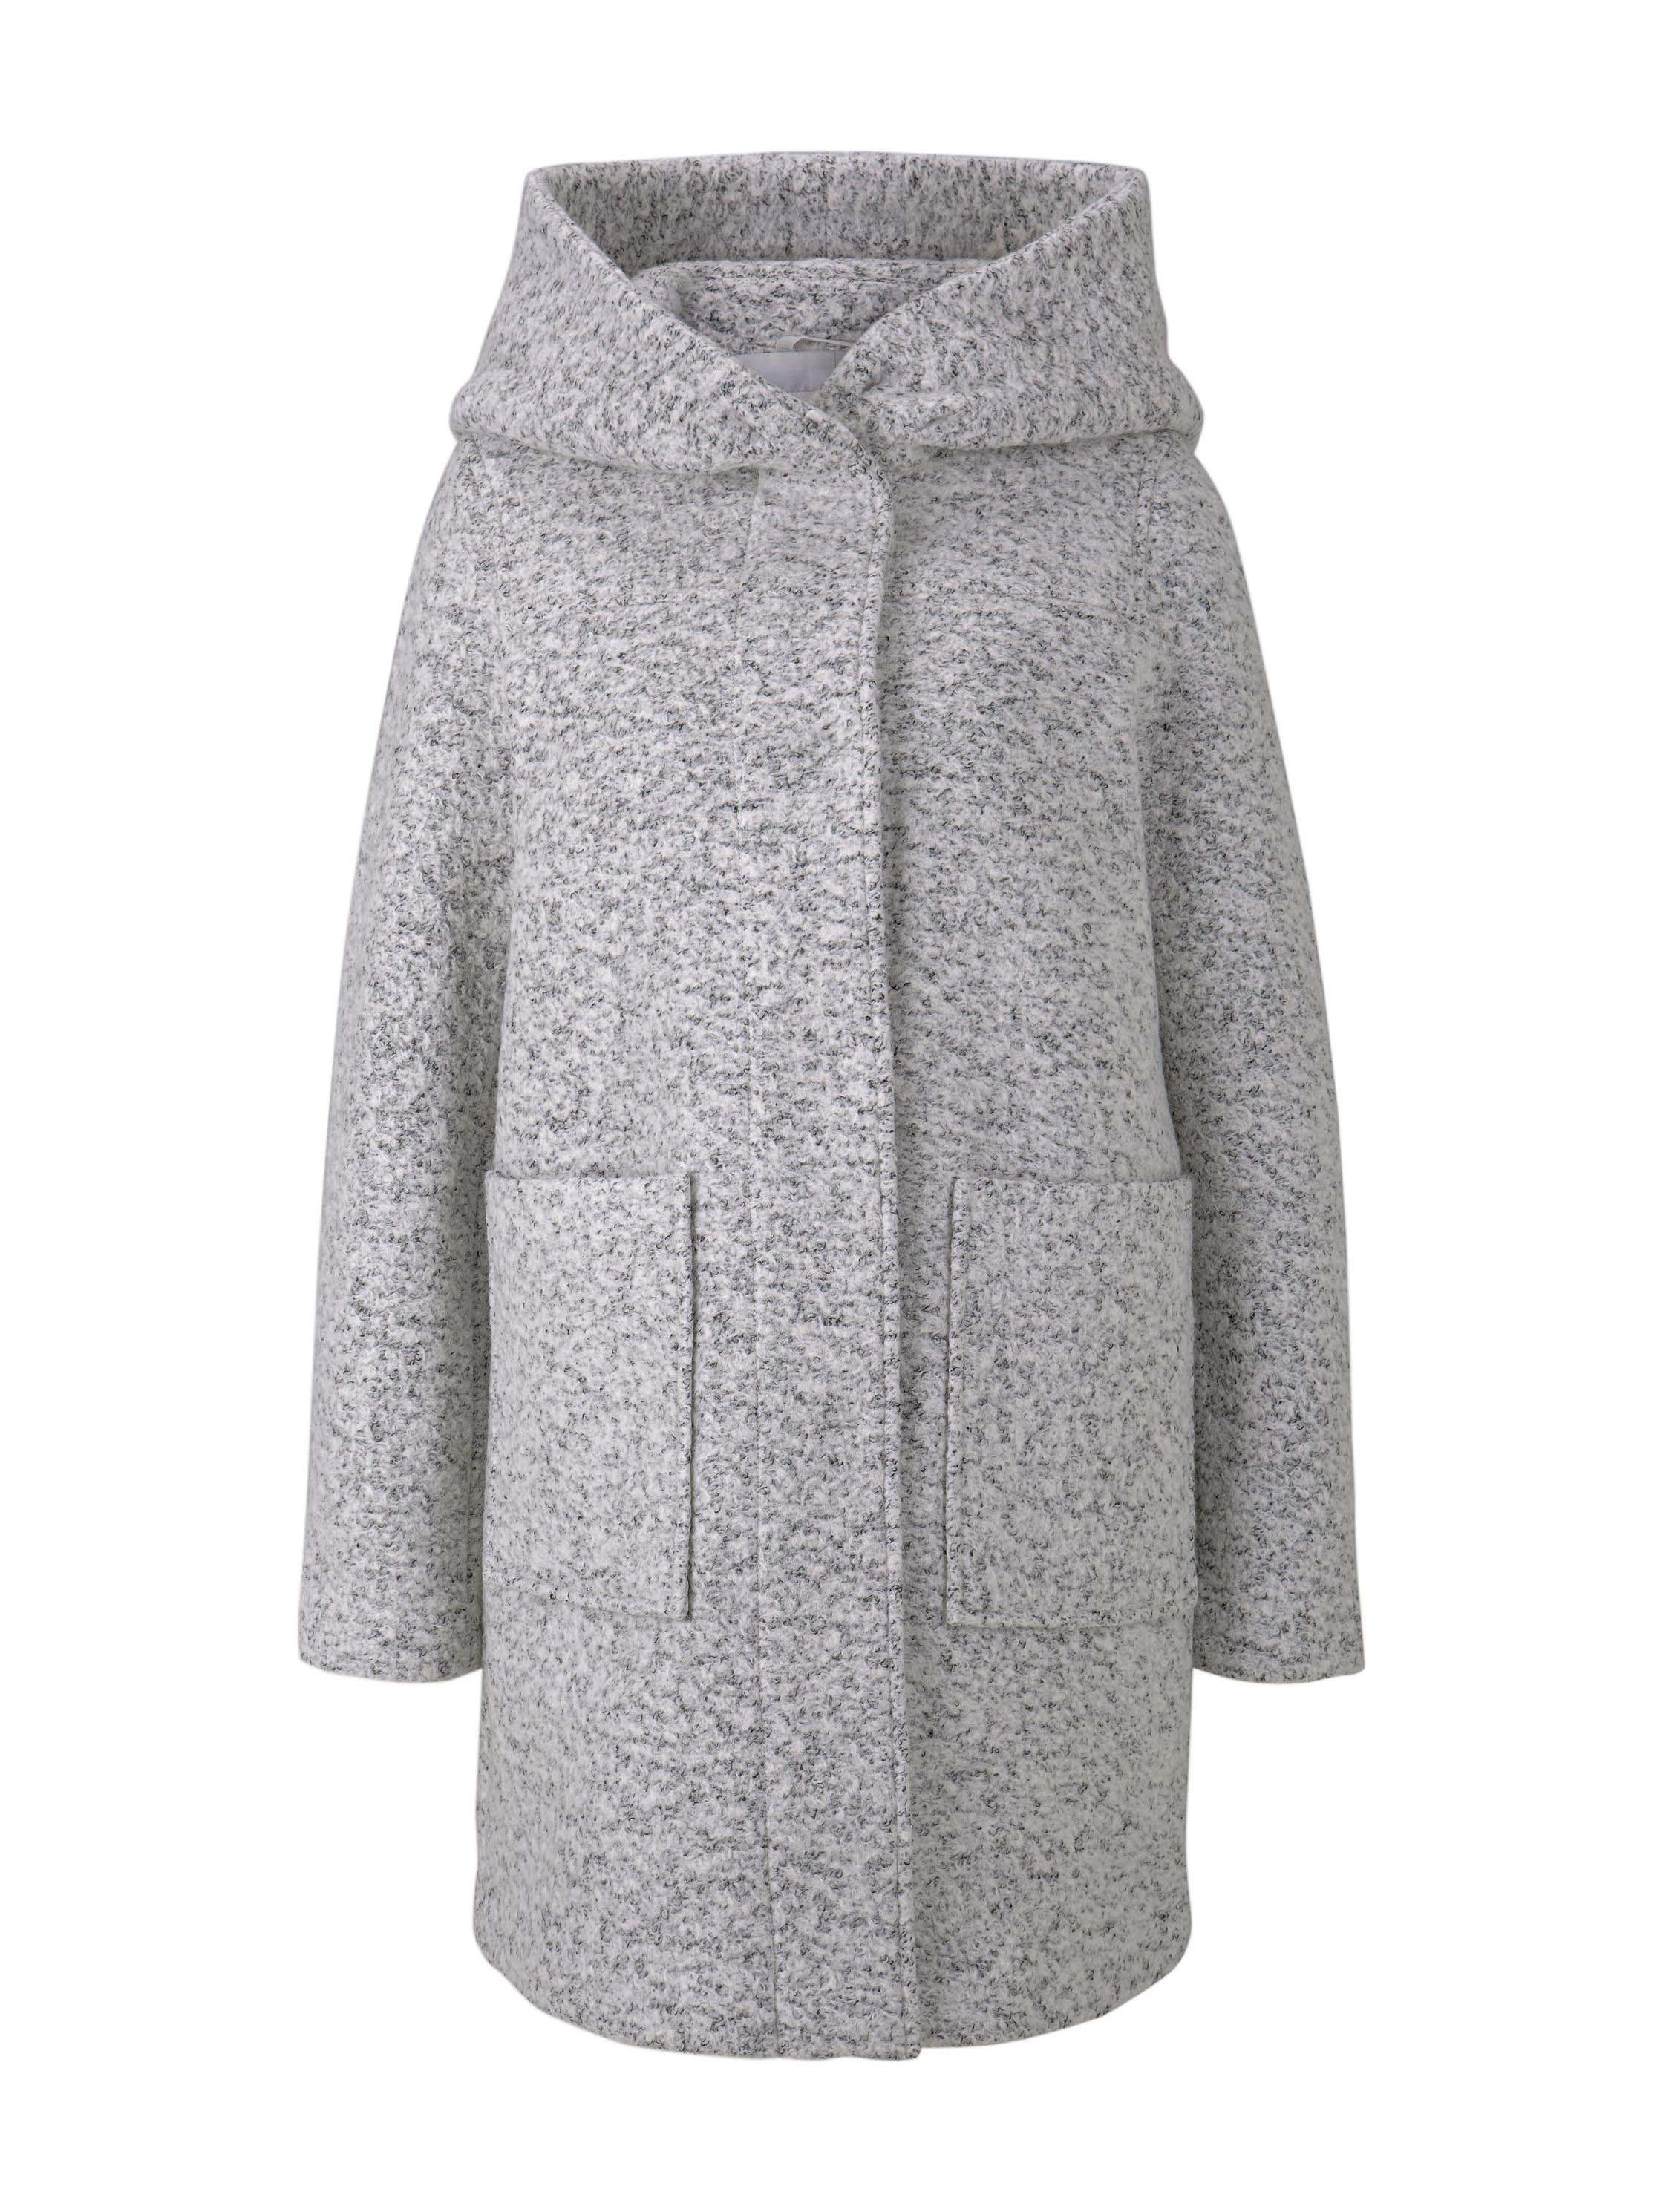 boucle wool coat with hood, grey black boucle